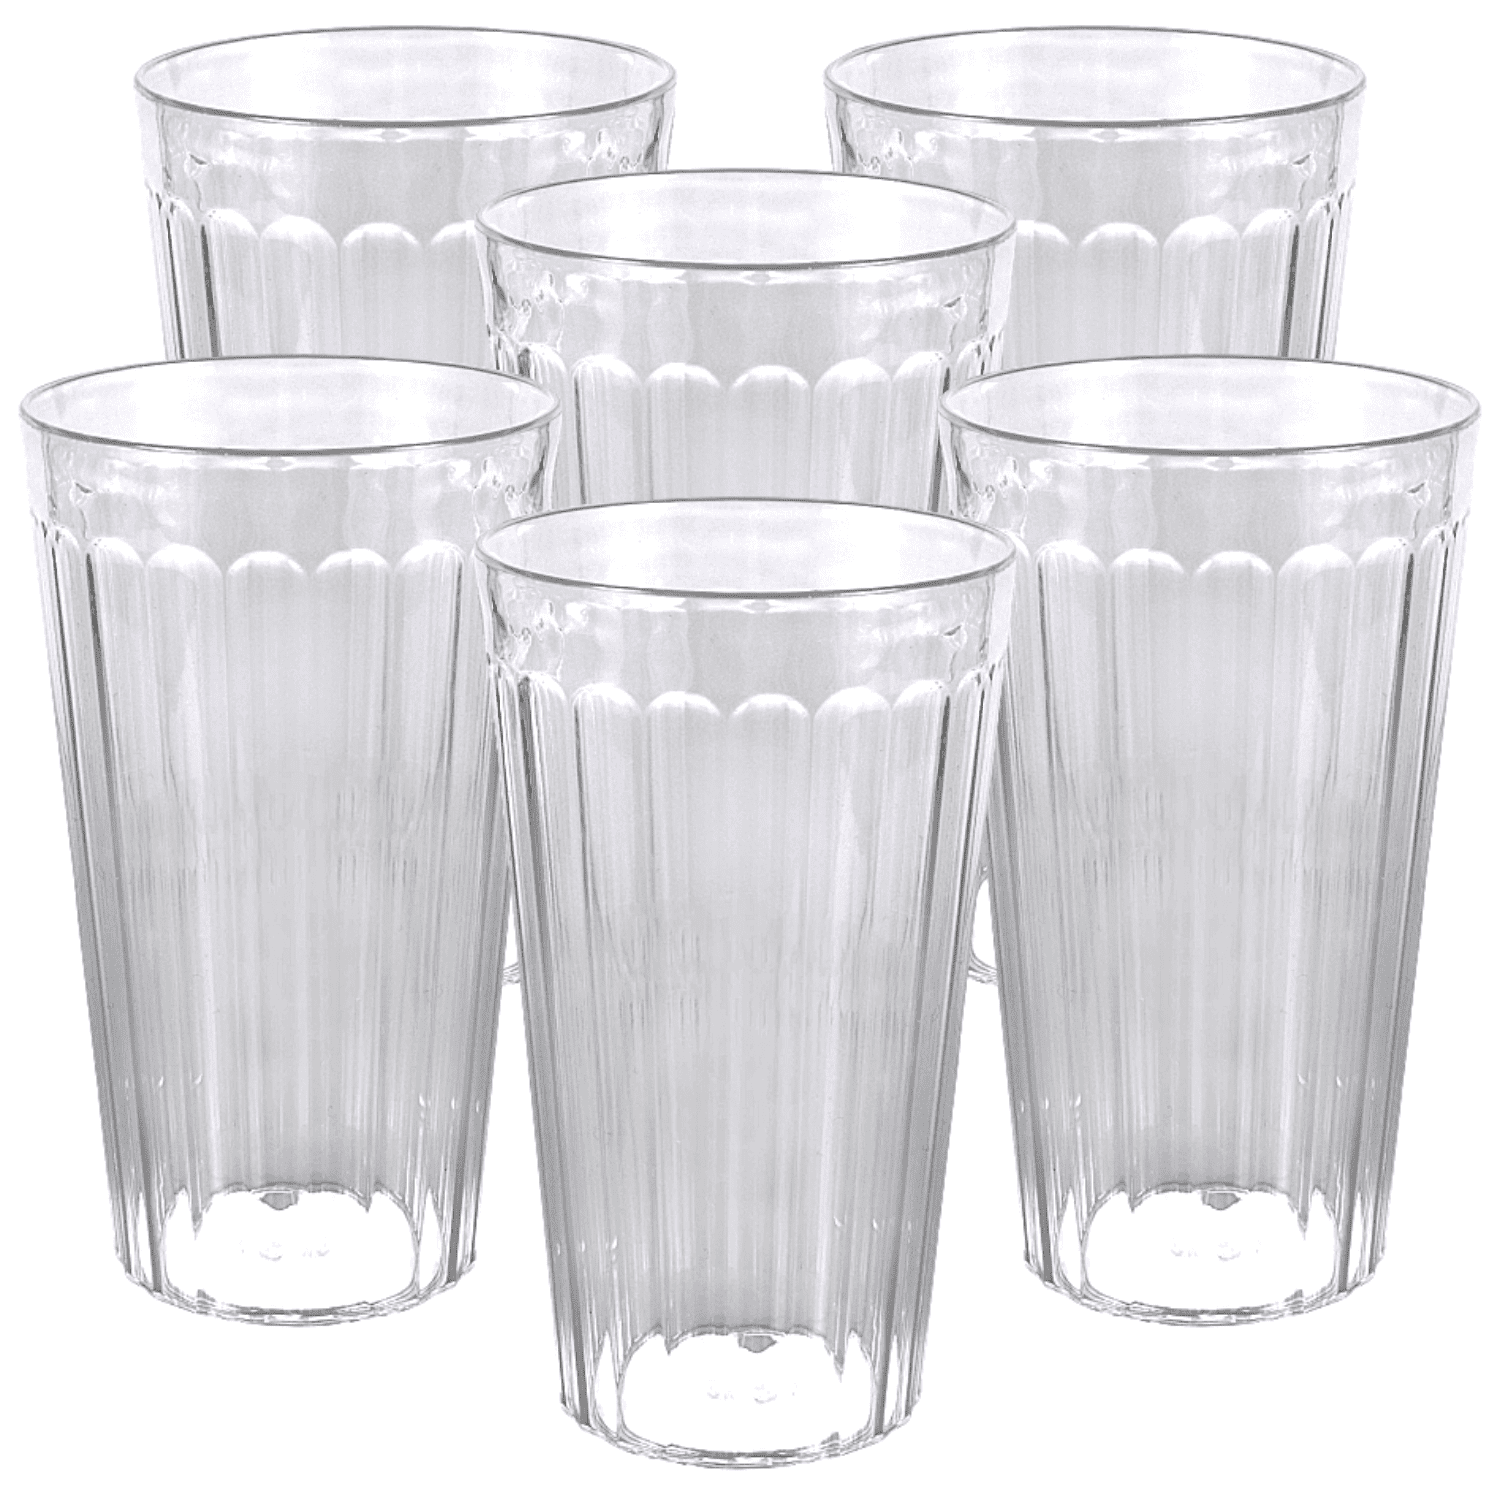 fulong 16 oz Plastic Highball Drinking Glasses, Set of 8 Water Beverage  Tumbler Set, Unbreakable Pla…See more fulong 16 oz Plastic Highball  Drinking